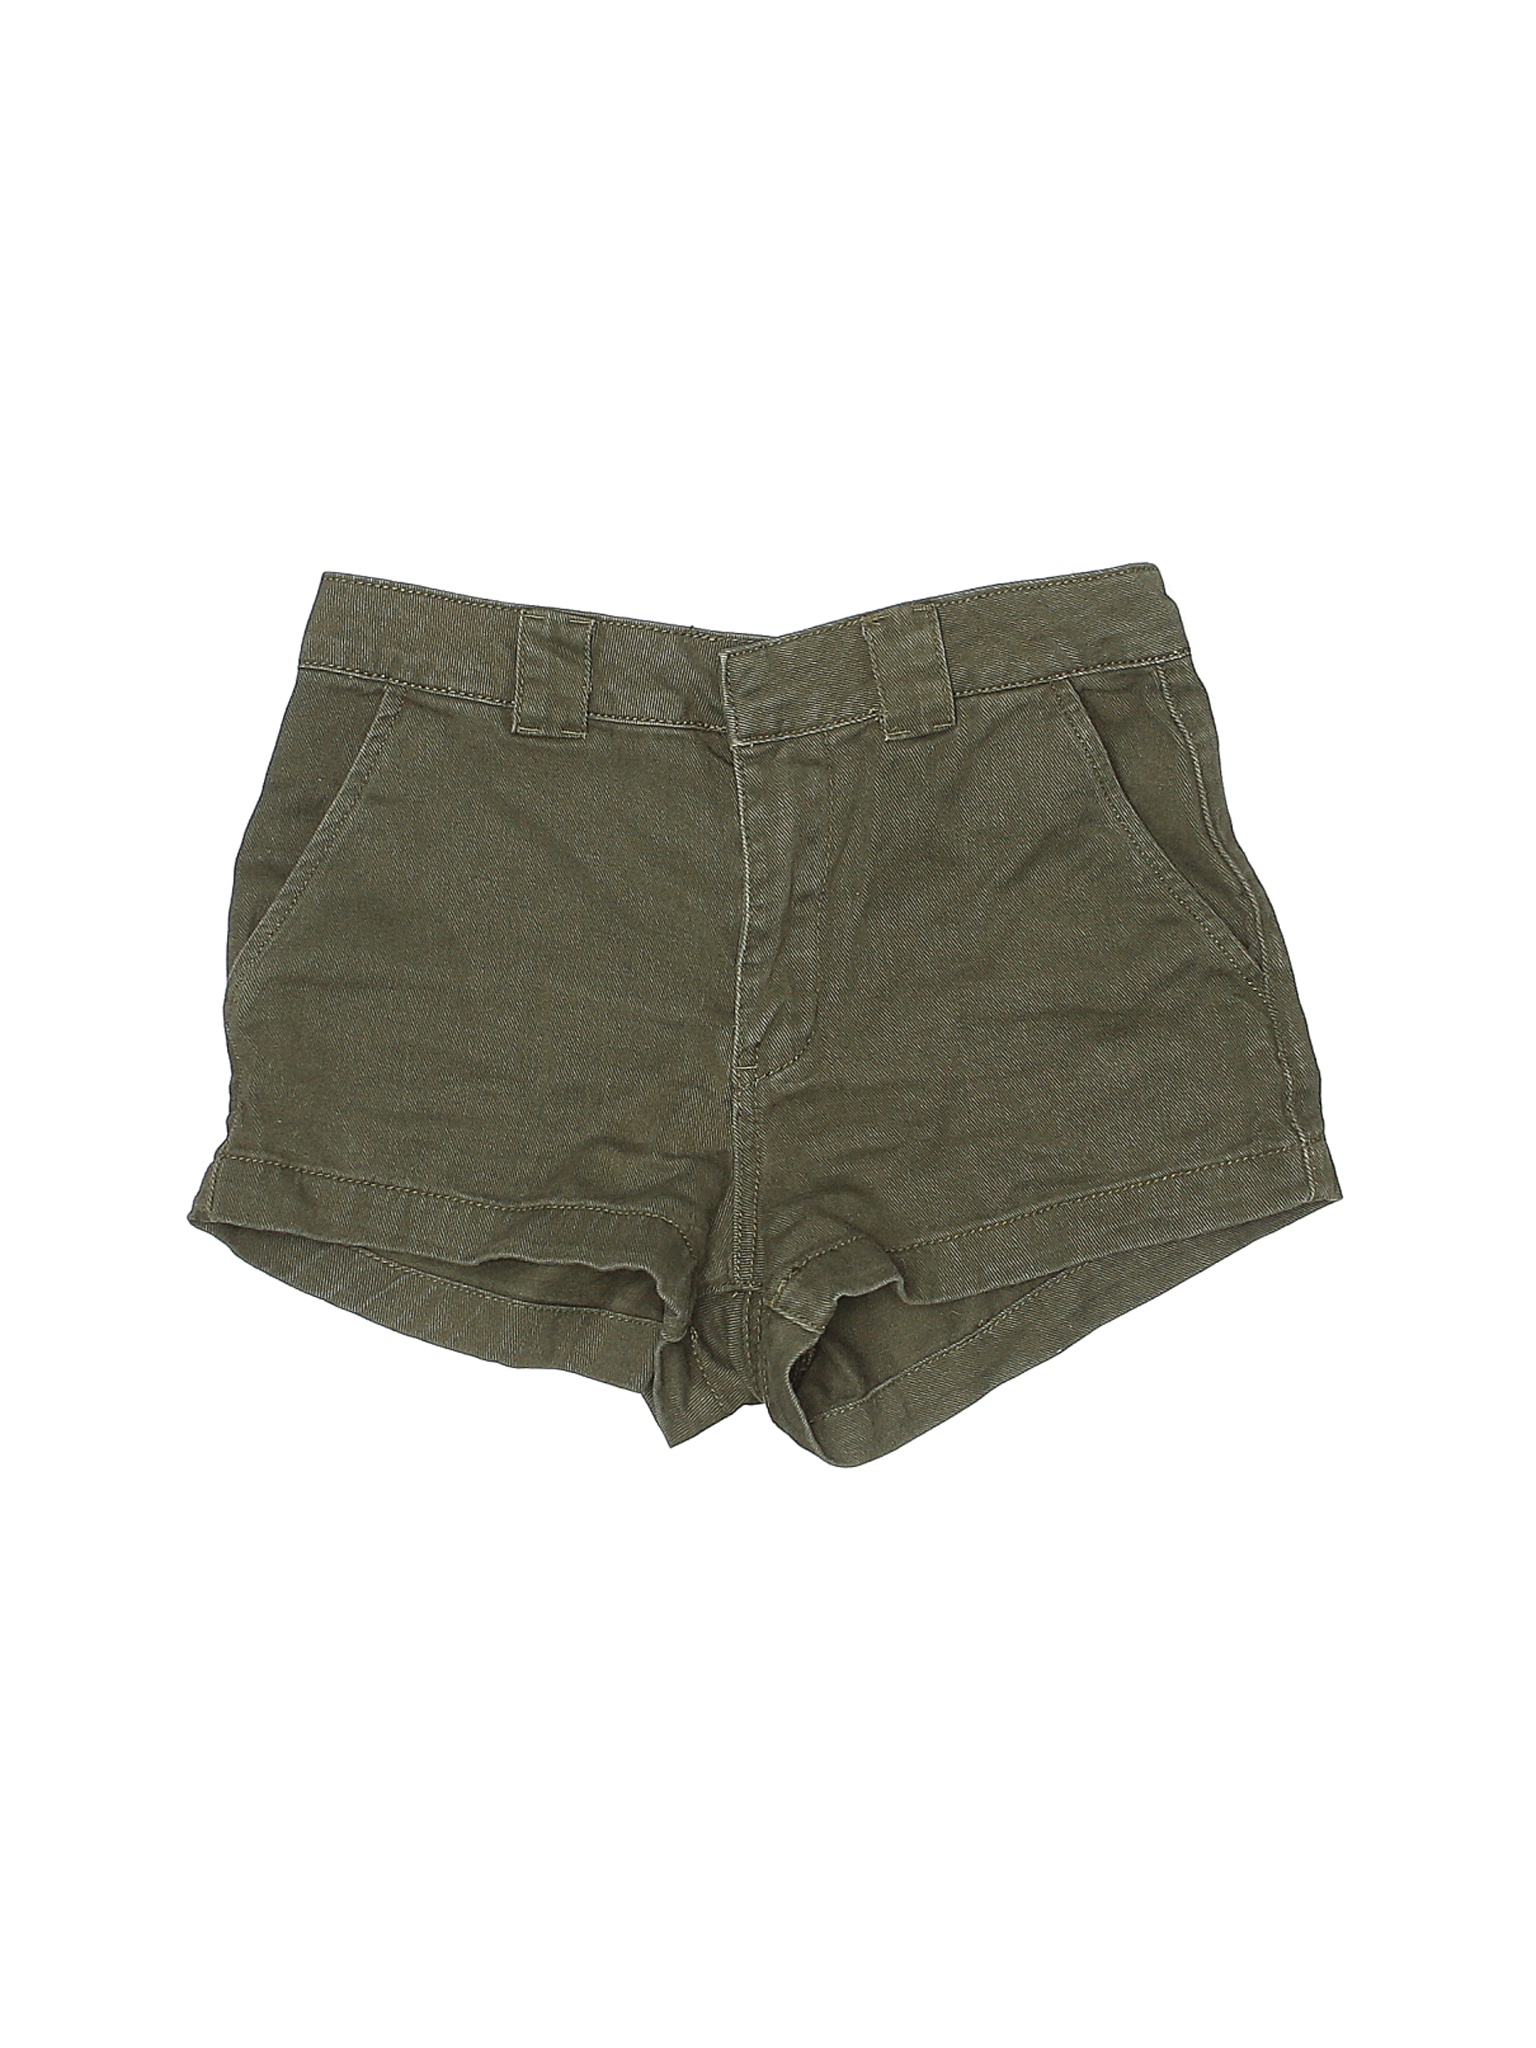 Forever 21 Women Green Khaki Shorts 25W | eBay